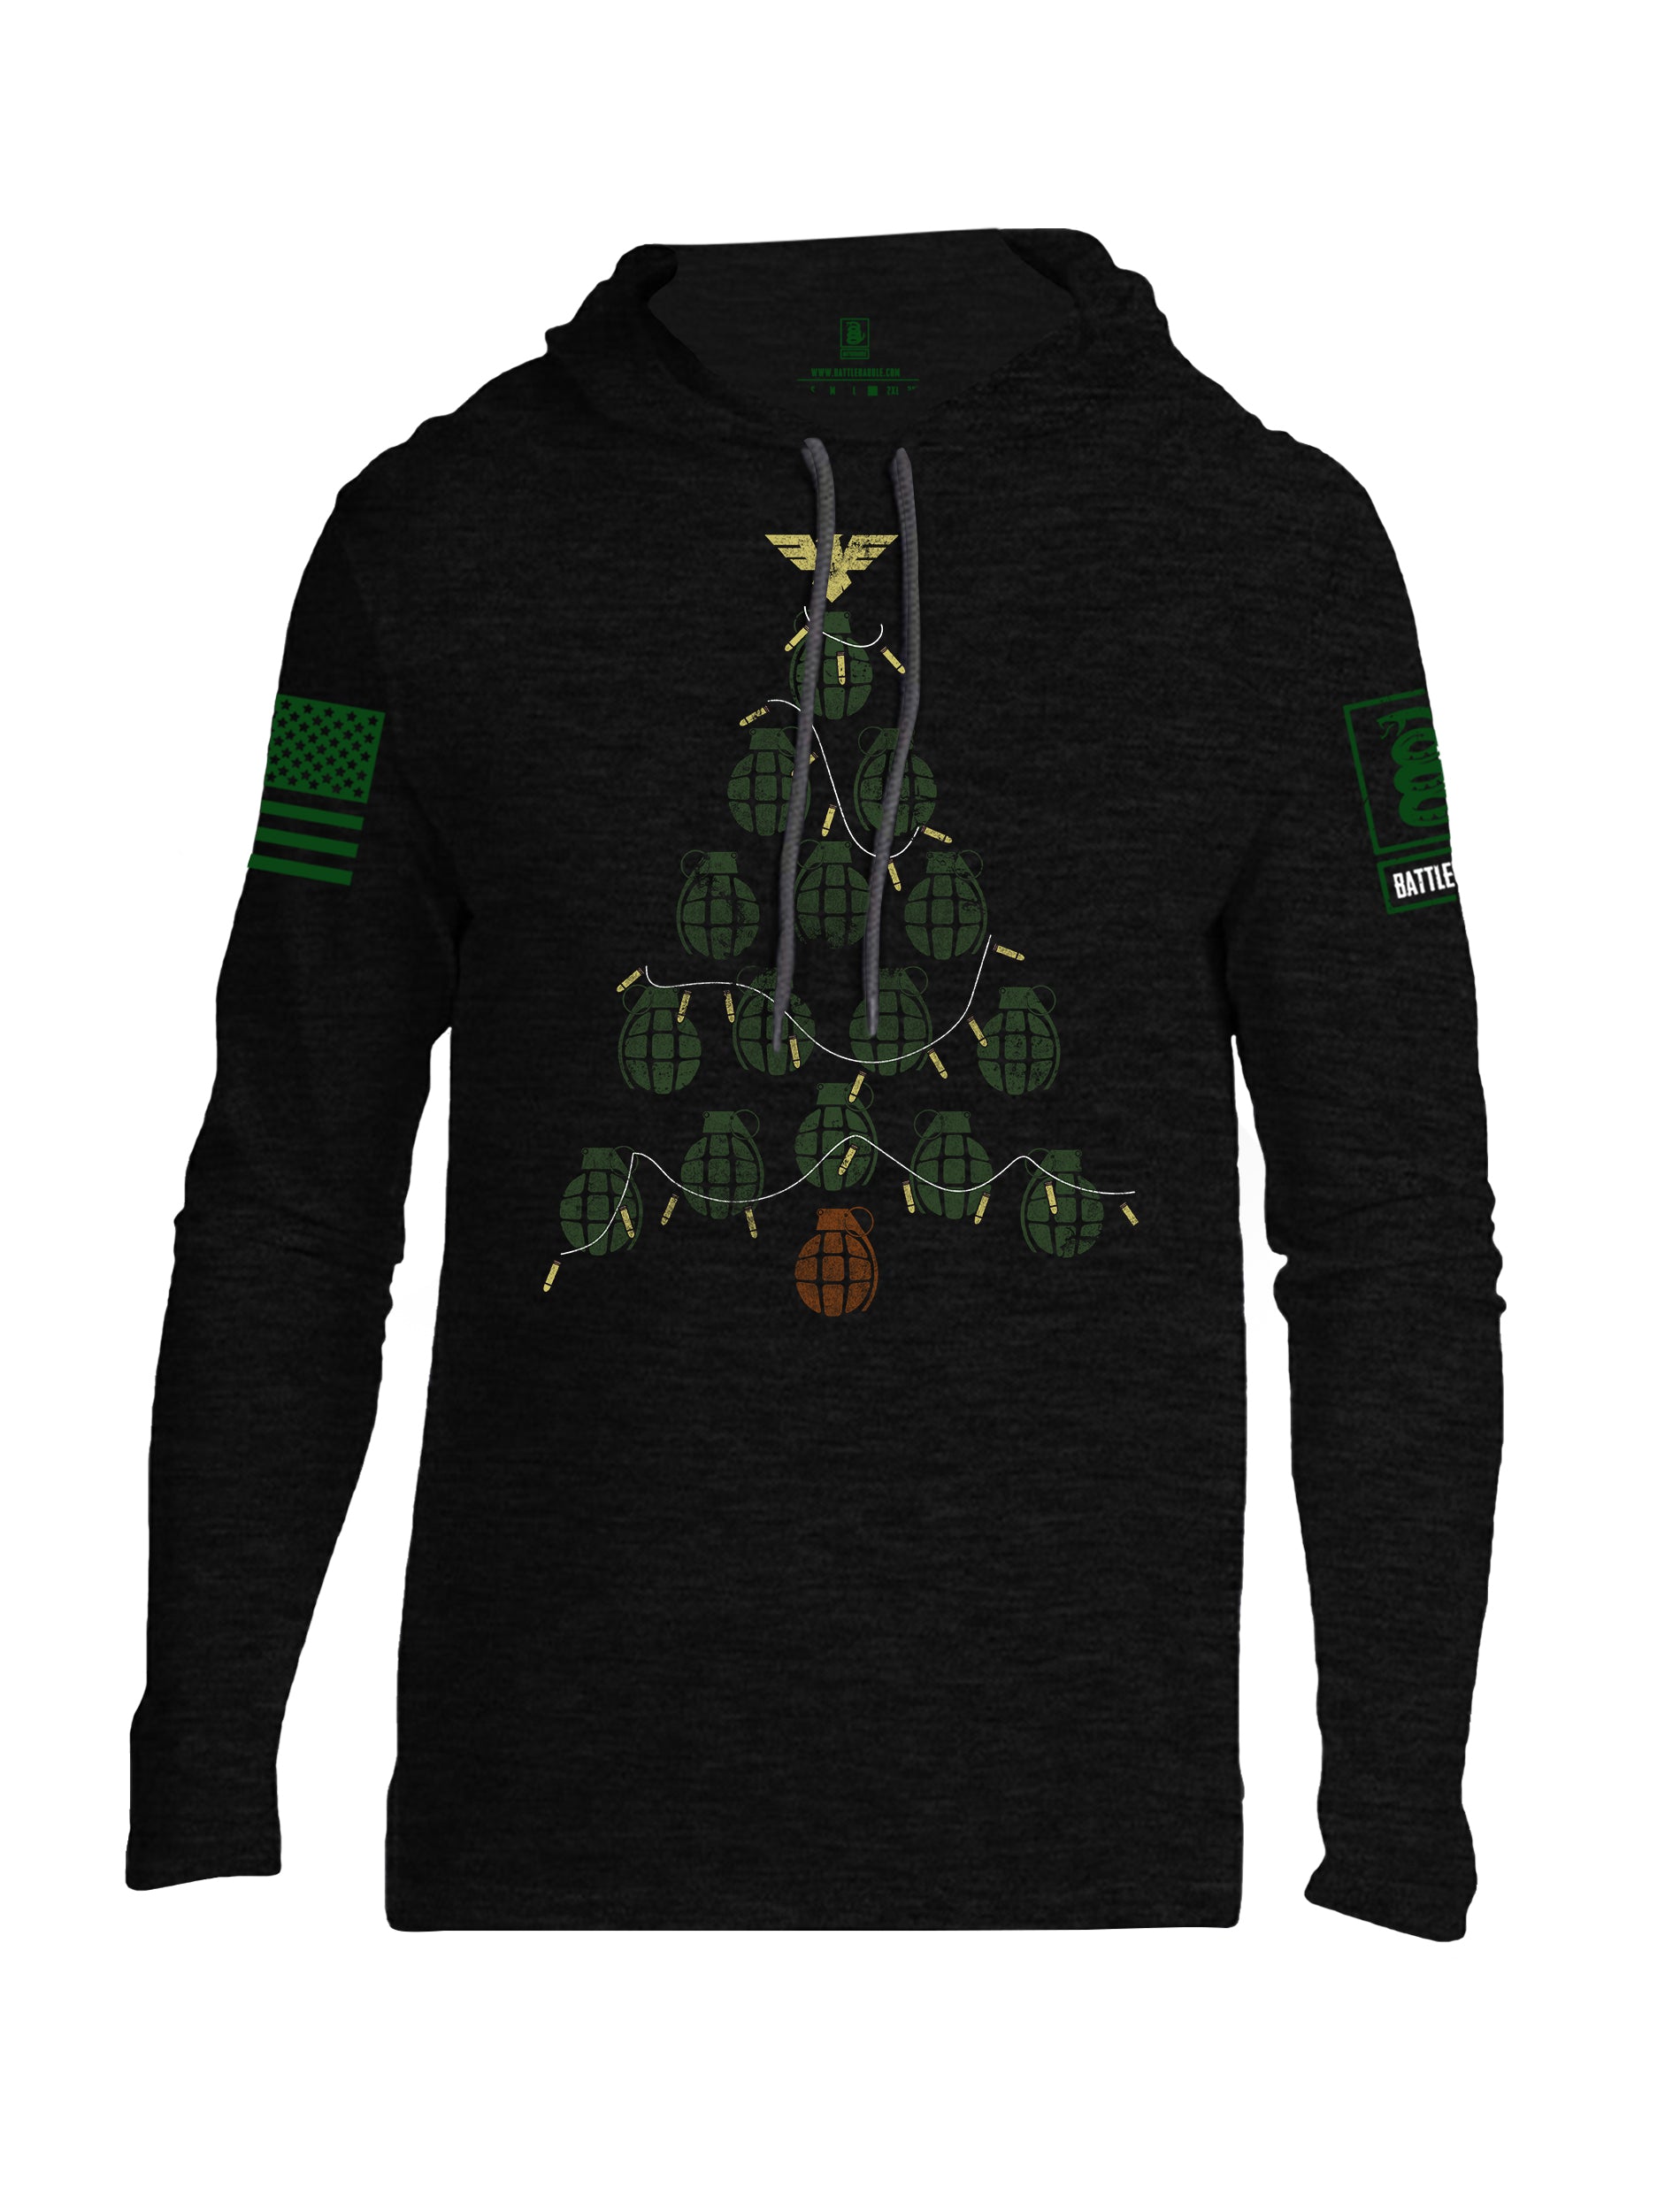 Battleraddle Christmas Greenery Grenade Tree Bomb Green Sleeve Print Mens Thin Cotton Lightweight Hoodie